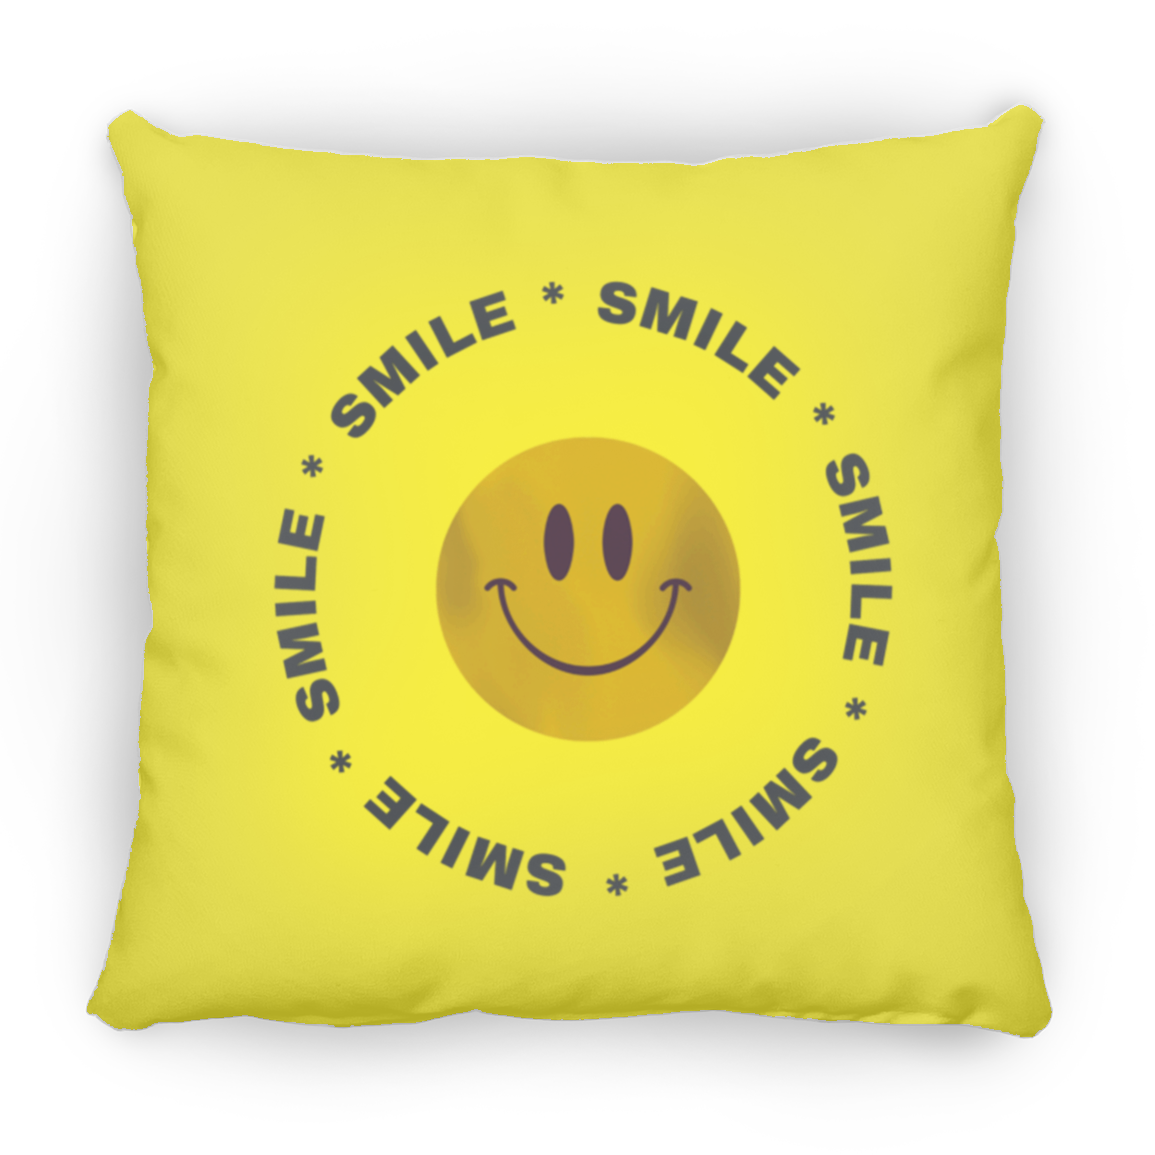 Smile Circle - Small Square Pillow